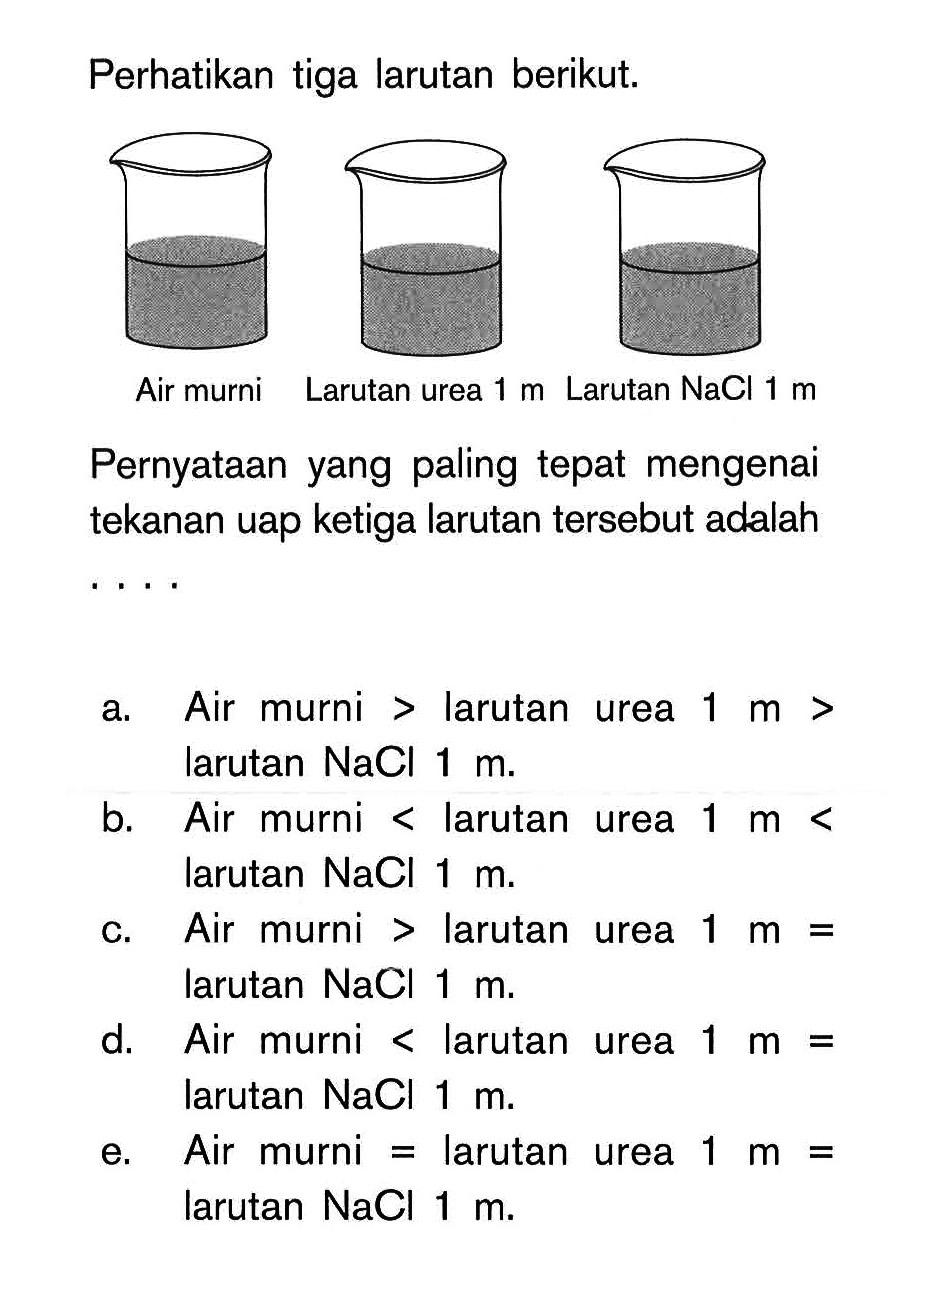 Perhatikan tiga larutan berikut. Air murni Larutan urea 1 m Larutan NaCl 1 m Pernyataan yang paling tepat mengenai tekanan uap ketiga larutan tersebut adalah ... a. Air murni > larutan urea 1 m > larutan NaCl 1 m b. Air murni < larutan urea 1 m < larutan NaCl 1 m c. Air murni > larutan urea 1 m = larutan NaCl 1 m d. Air murni < larutan urea 1 m = larutan NaCl 1 m e. Air murni = larutan urea 1 m = larutan NaCl 1 m.